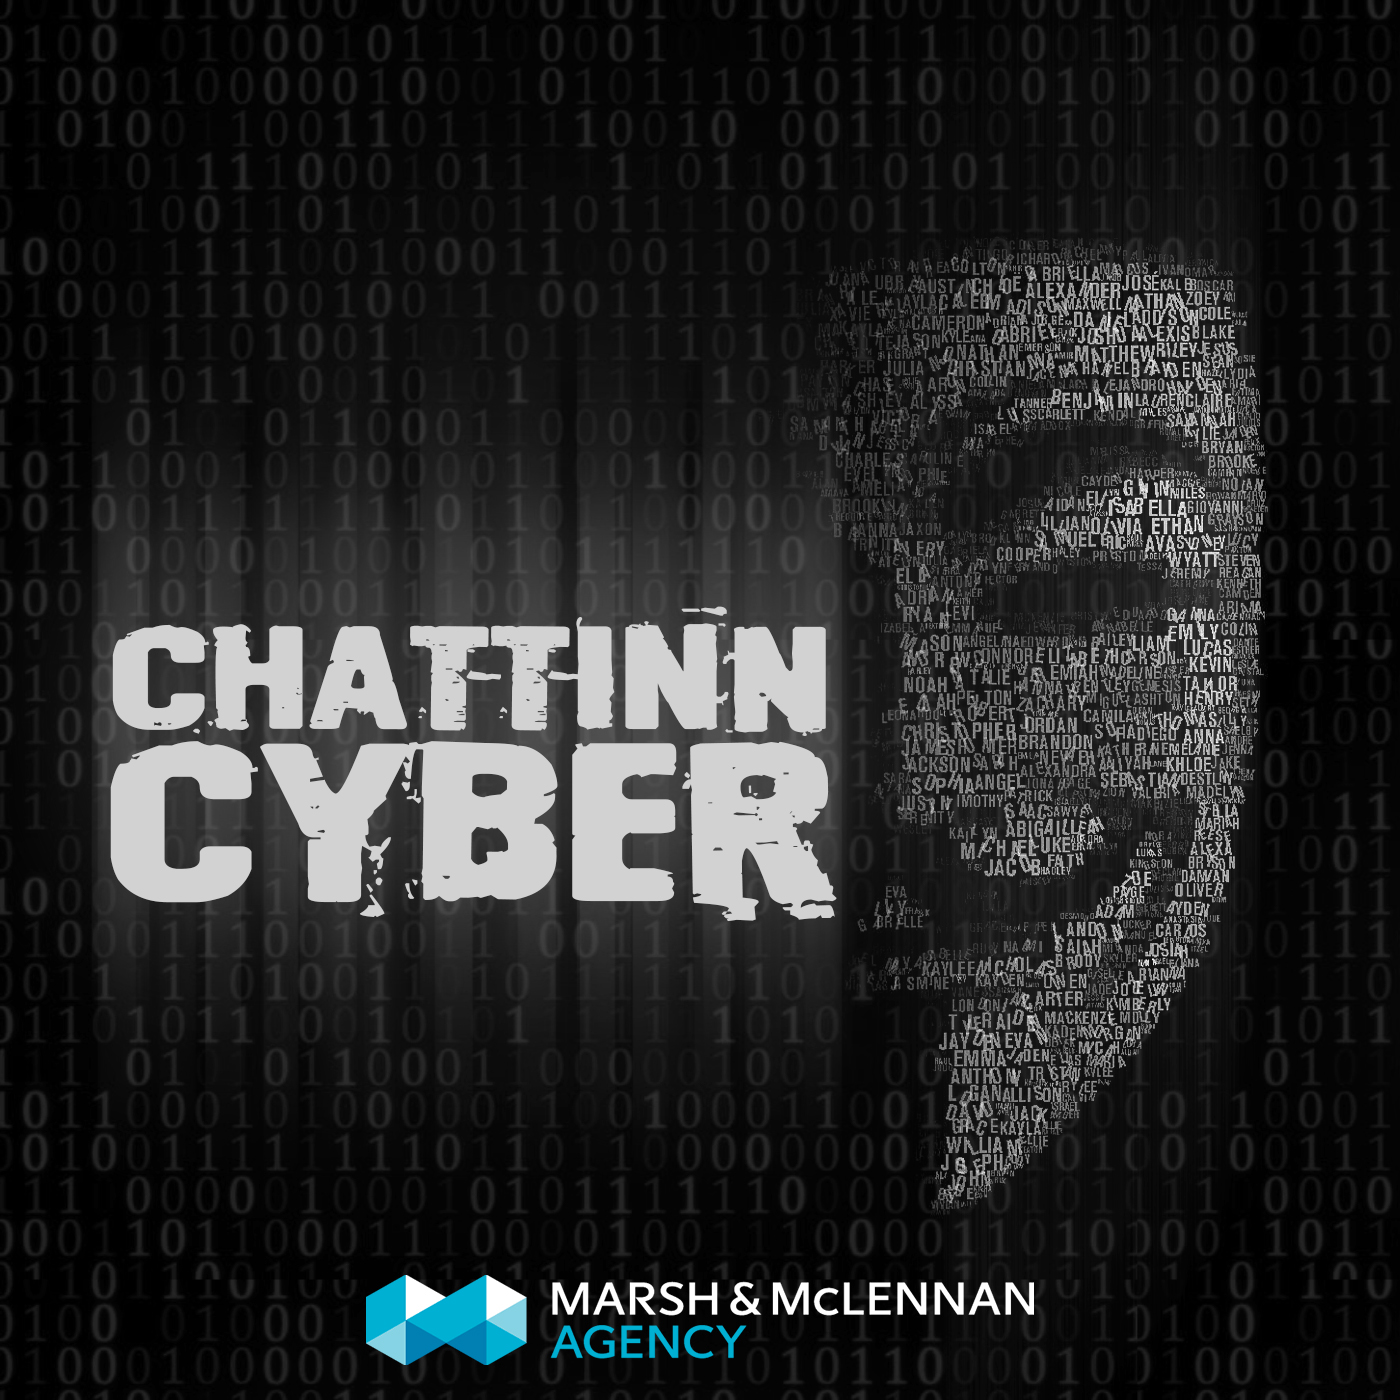 Chattinn Cyber